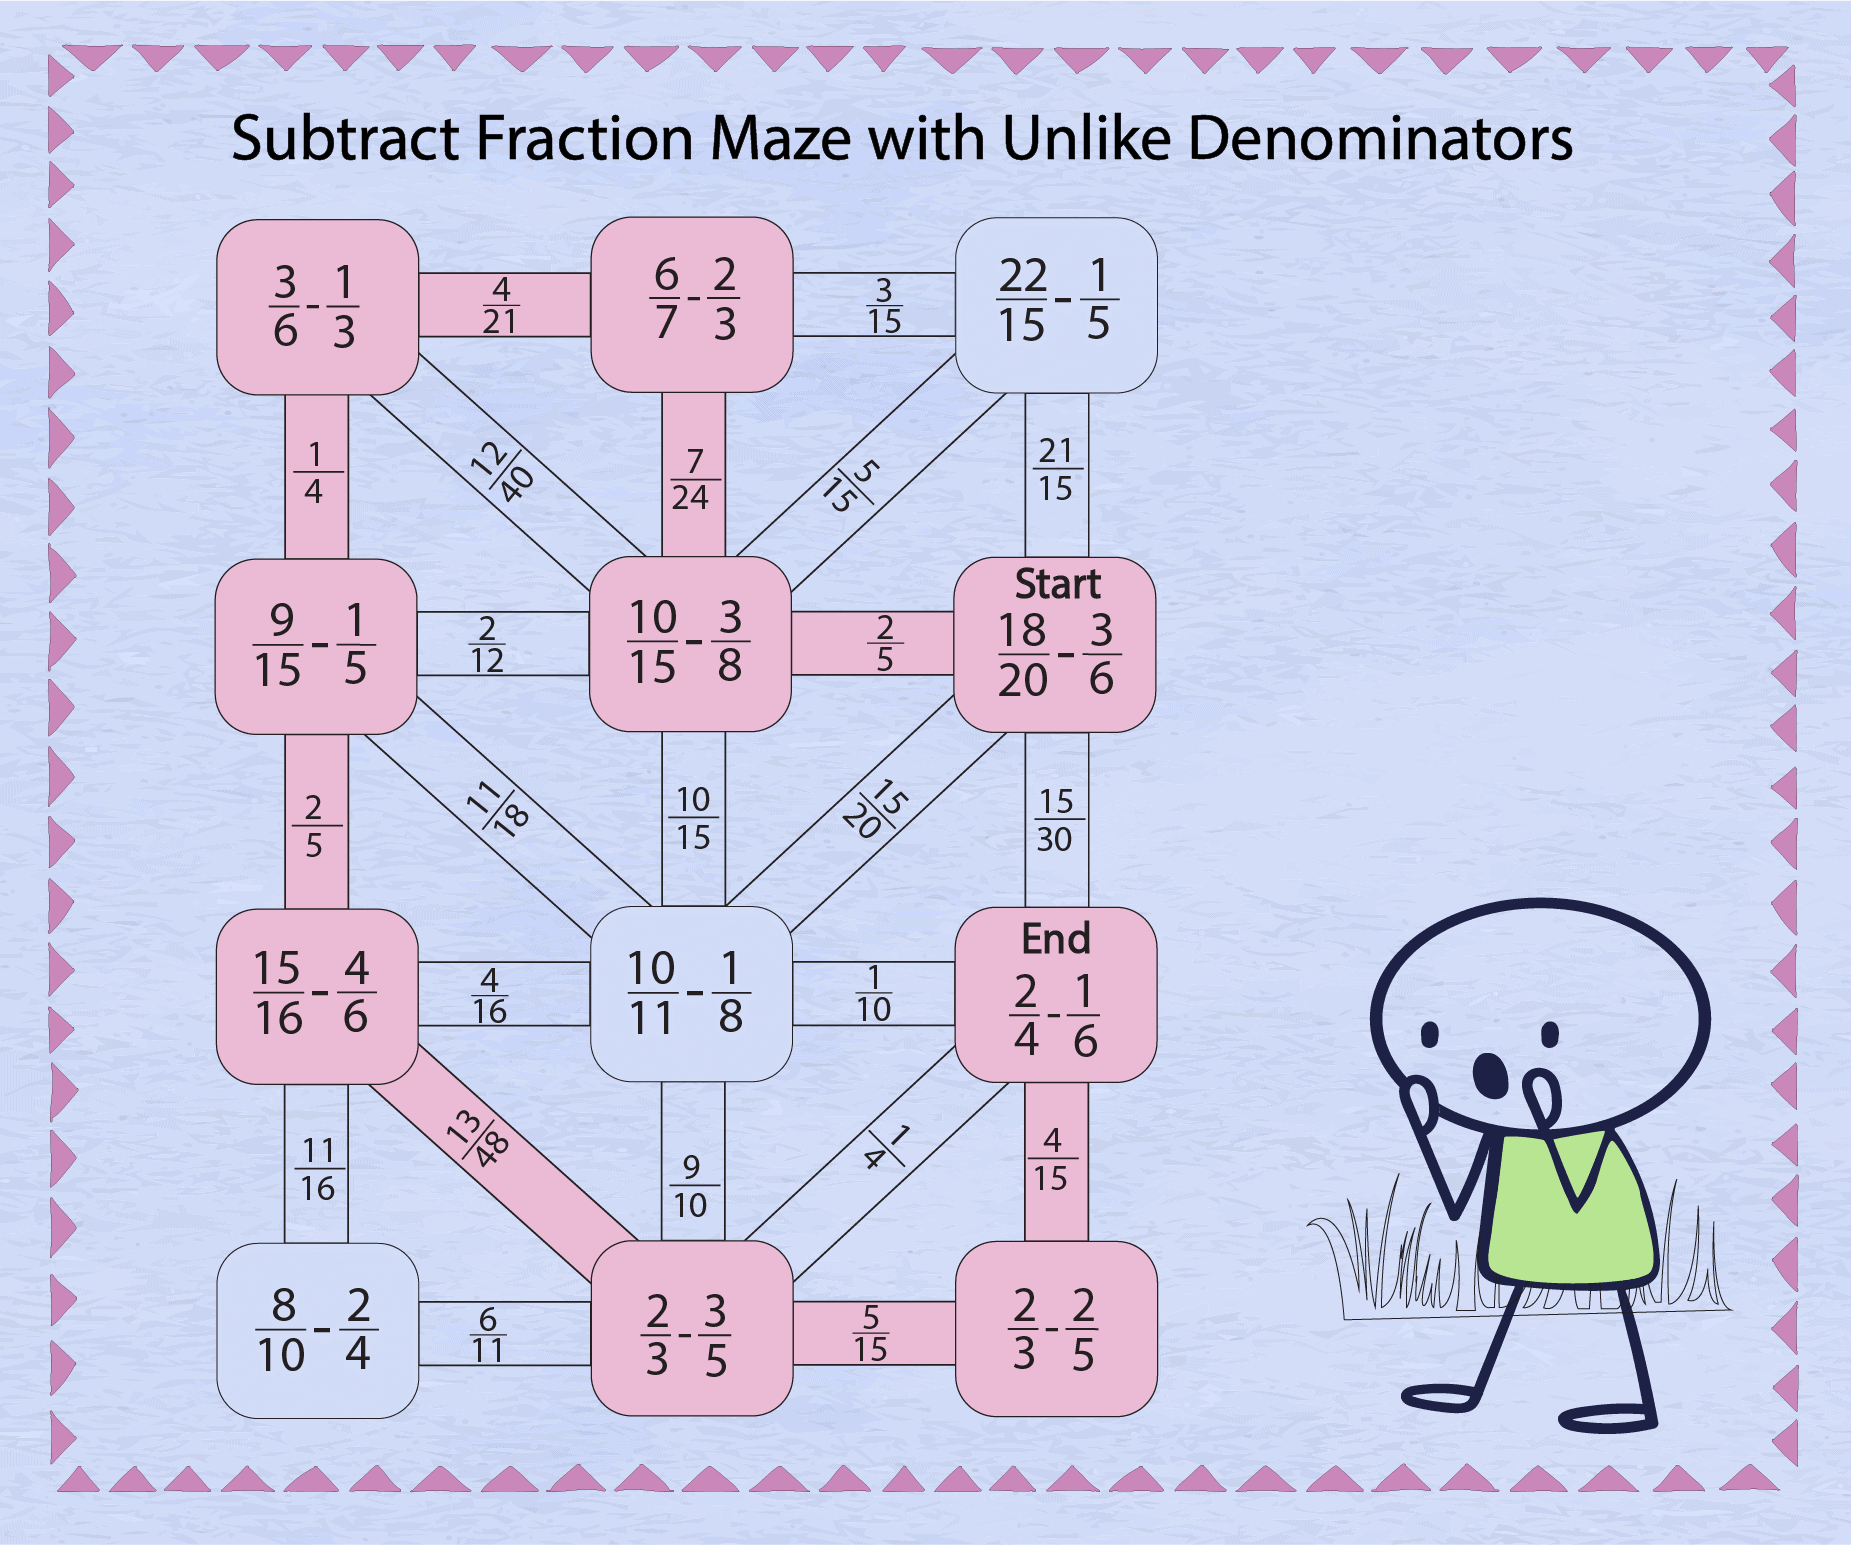 Subtract Fraction Maze with Unlike Denominators